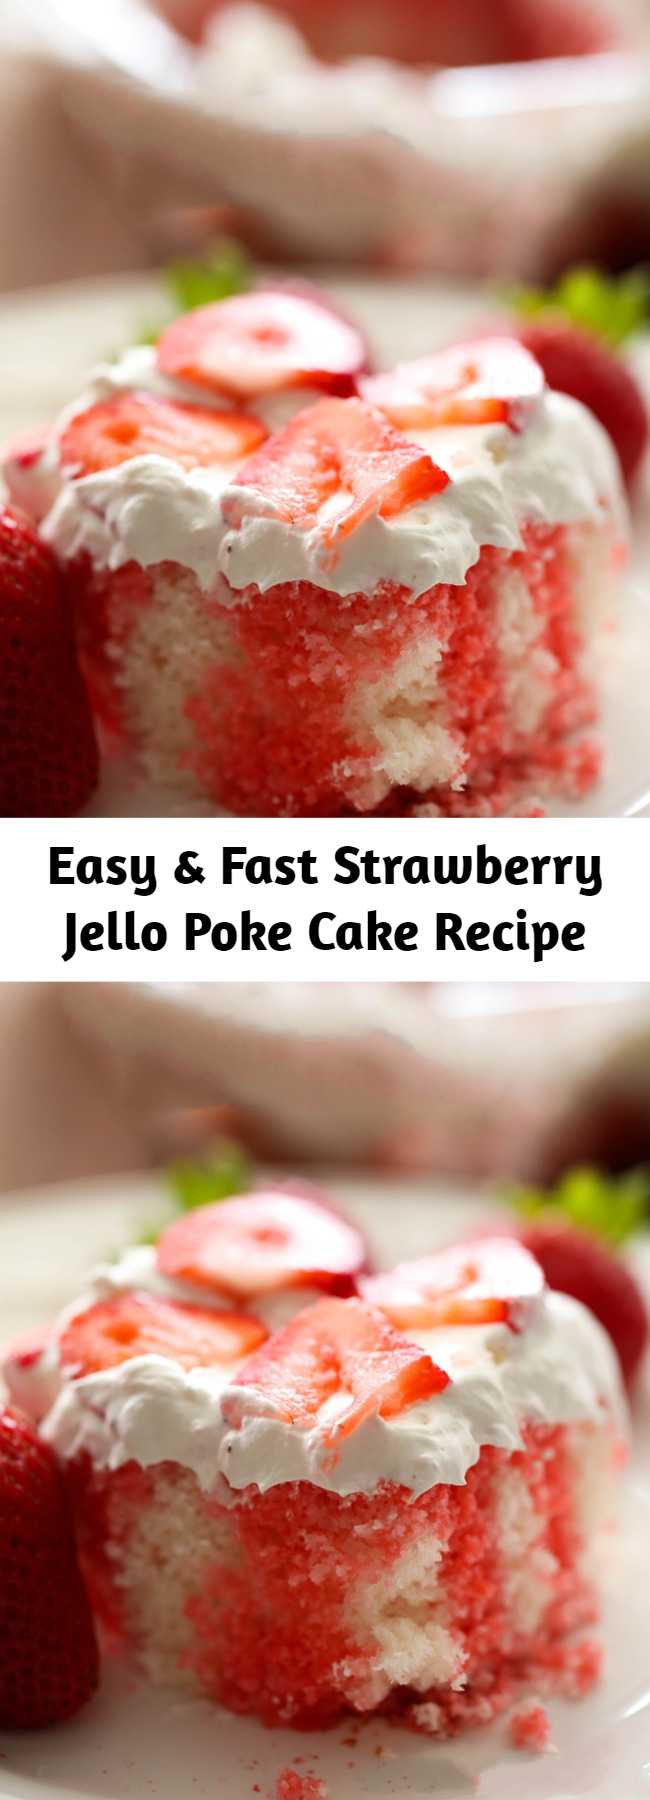 Strawberry Jello Poke Cake Recipe - This recipe is easy, fast, beautiful and SO yummy!